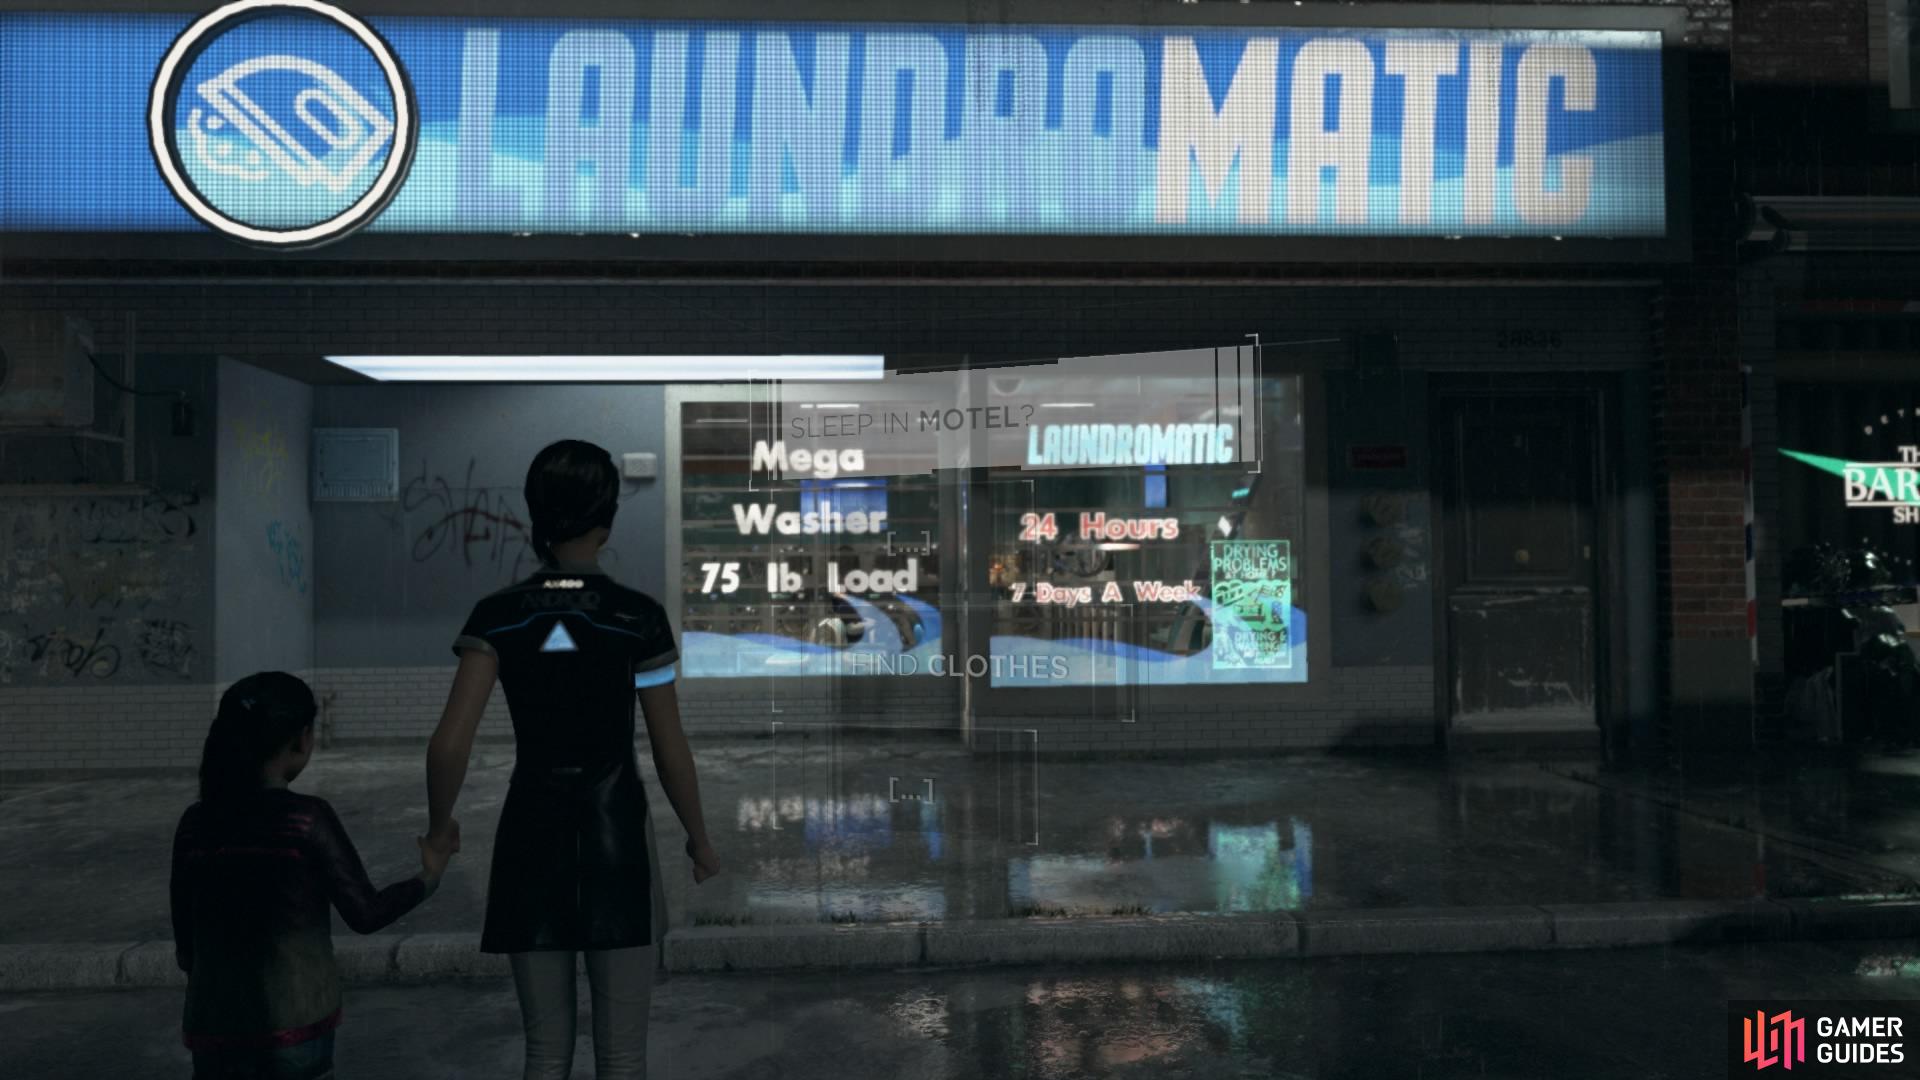 Enter the laundromat